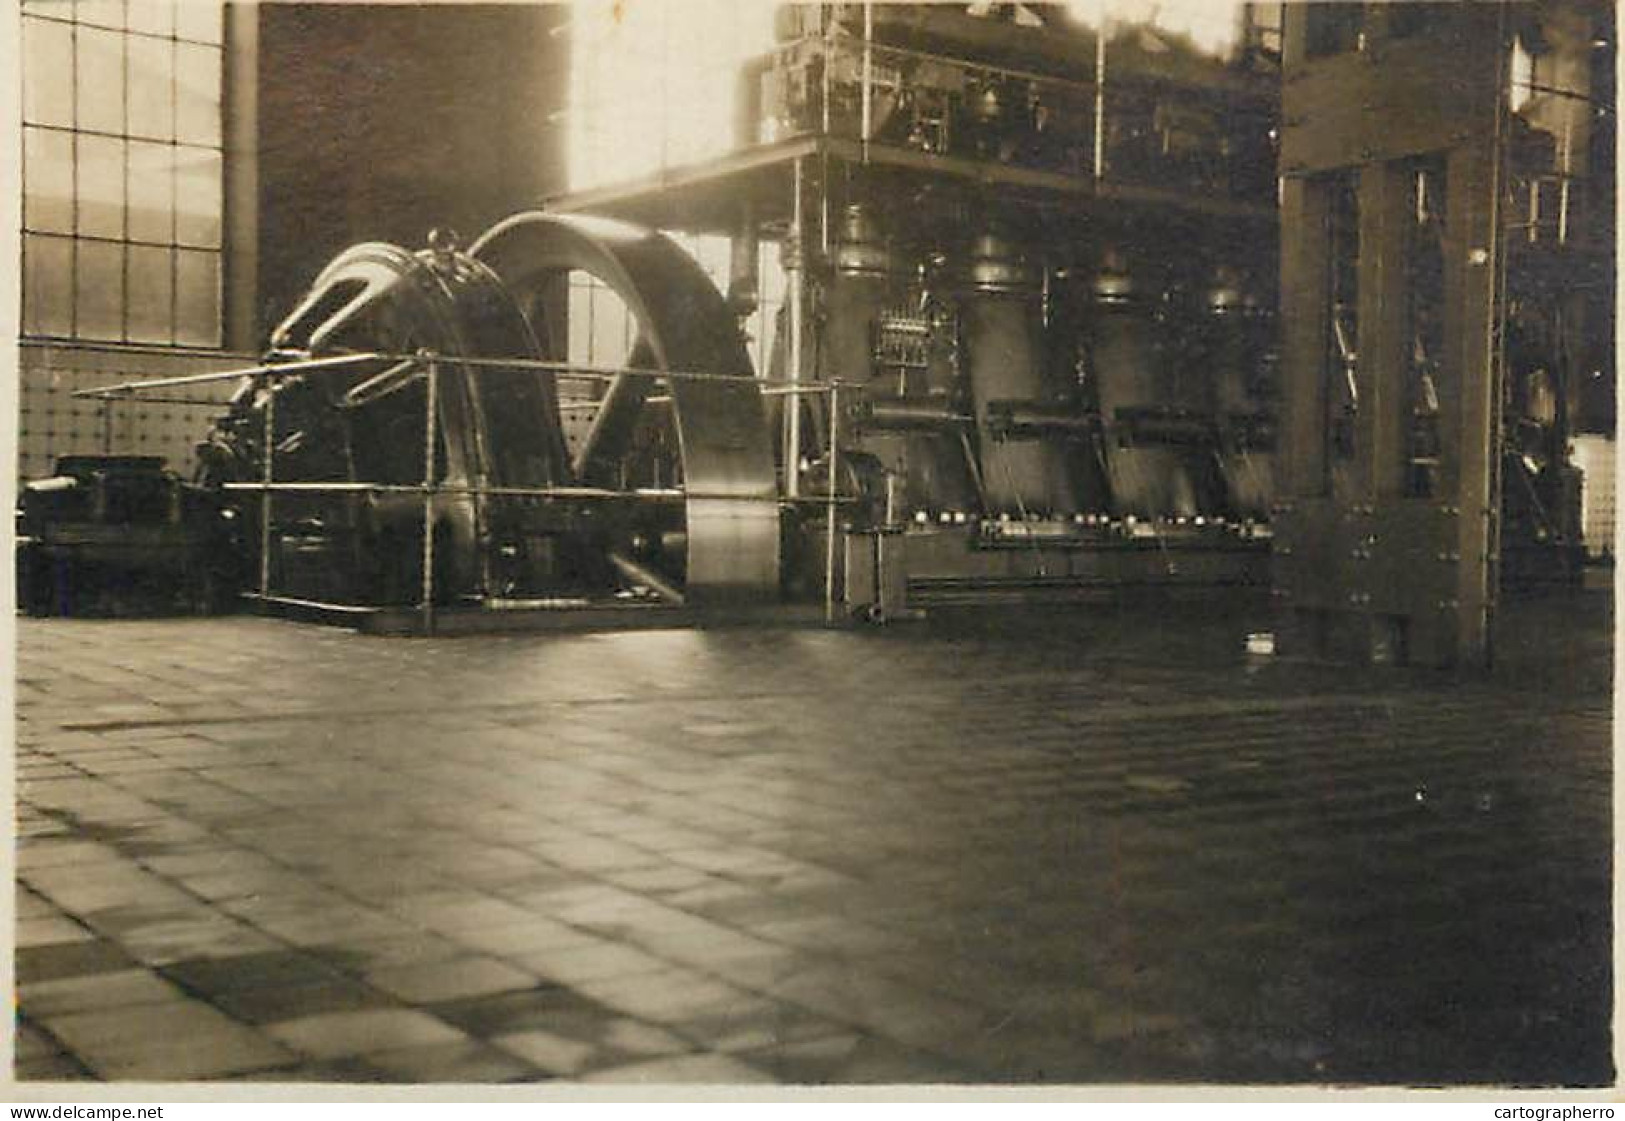 Electric Power Plant Interior Targu Mures Romania Photo 1930s - Objetos